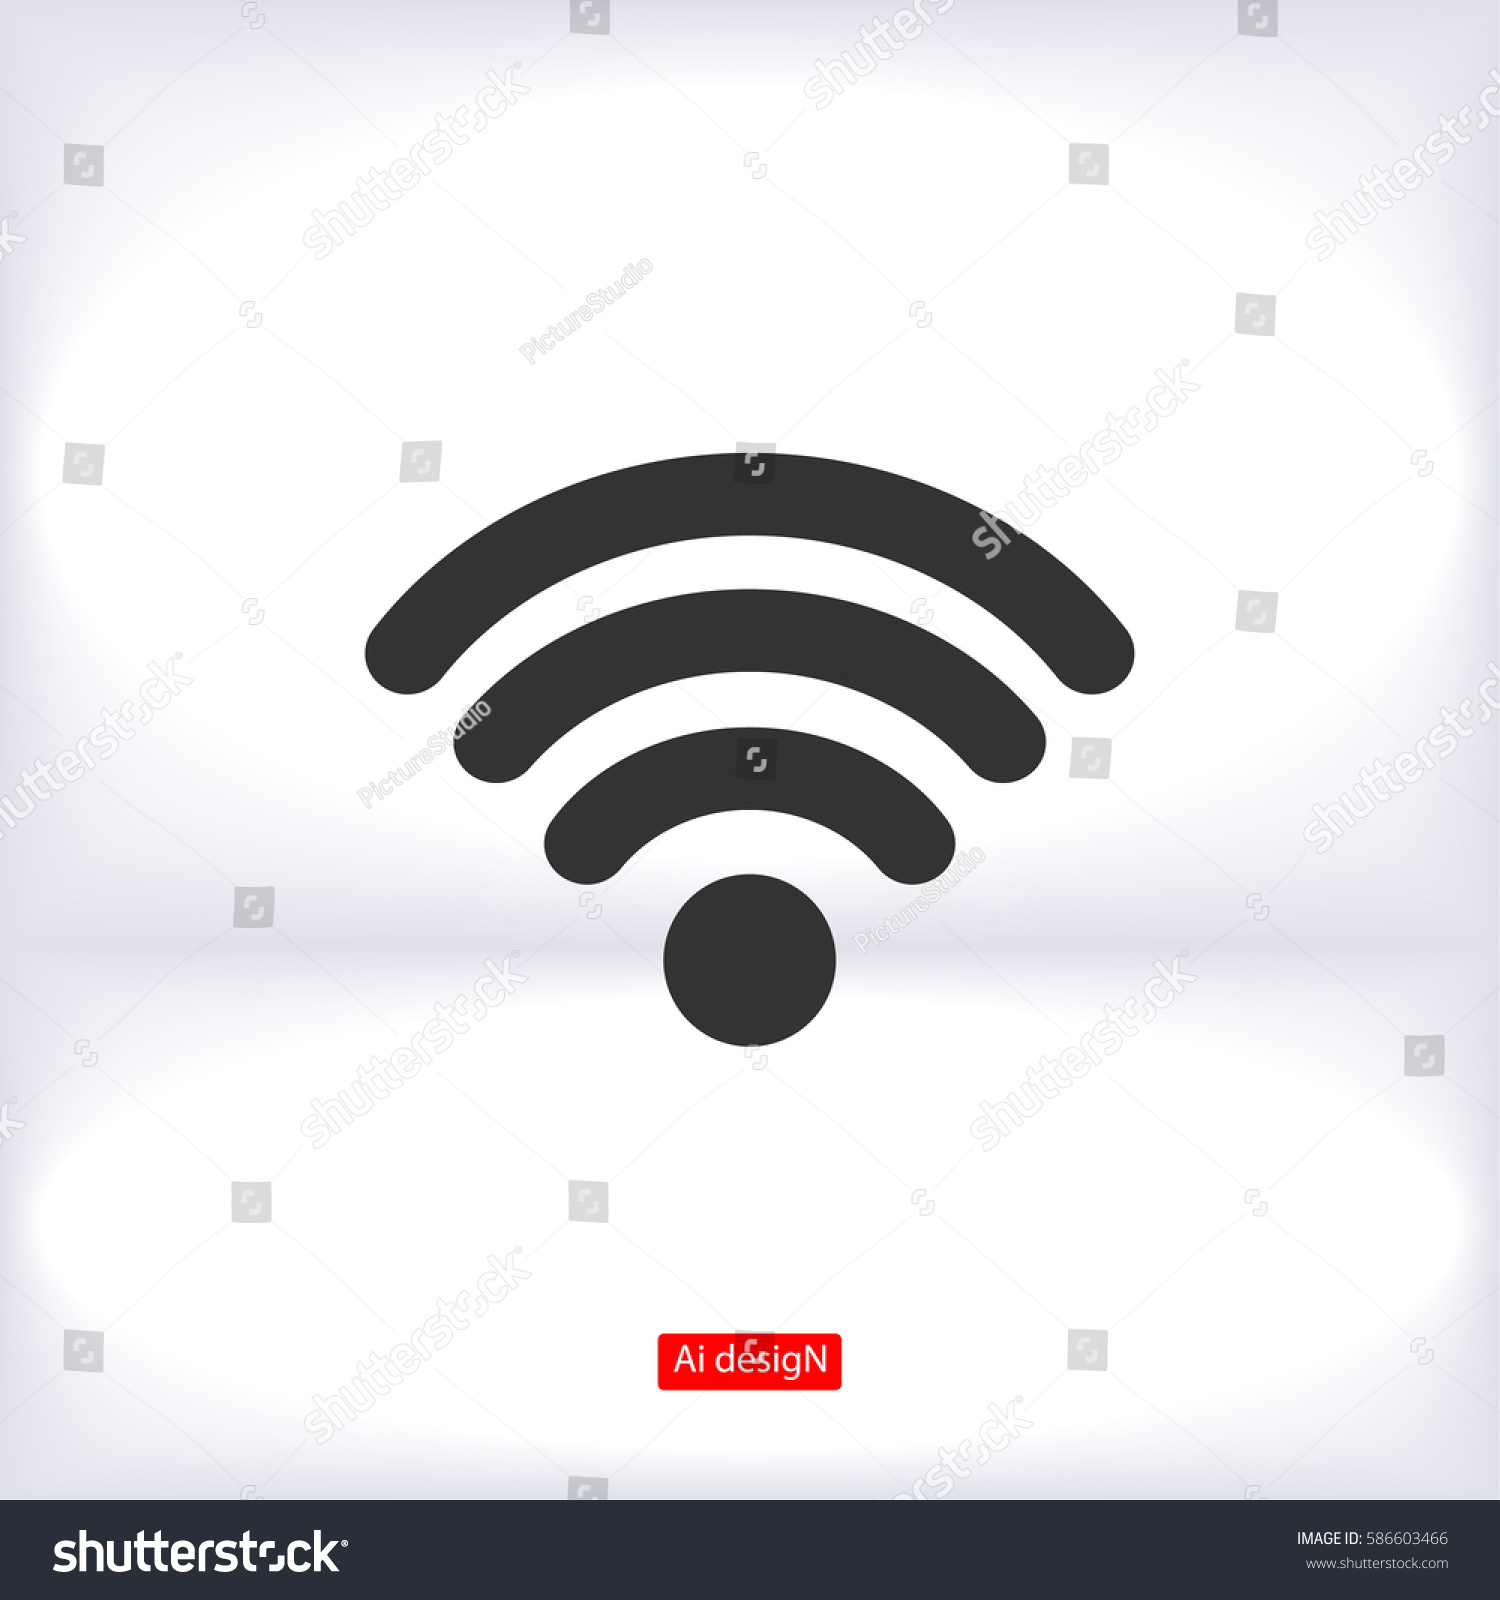 Edit Vectors Free Online - Wi-Fi icon. | Shutterstock Editor